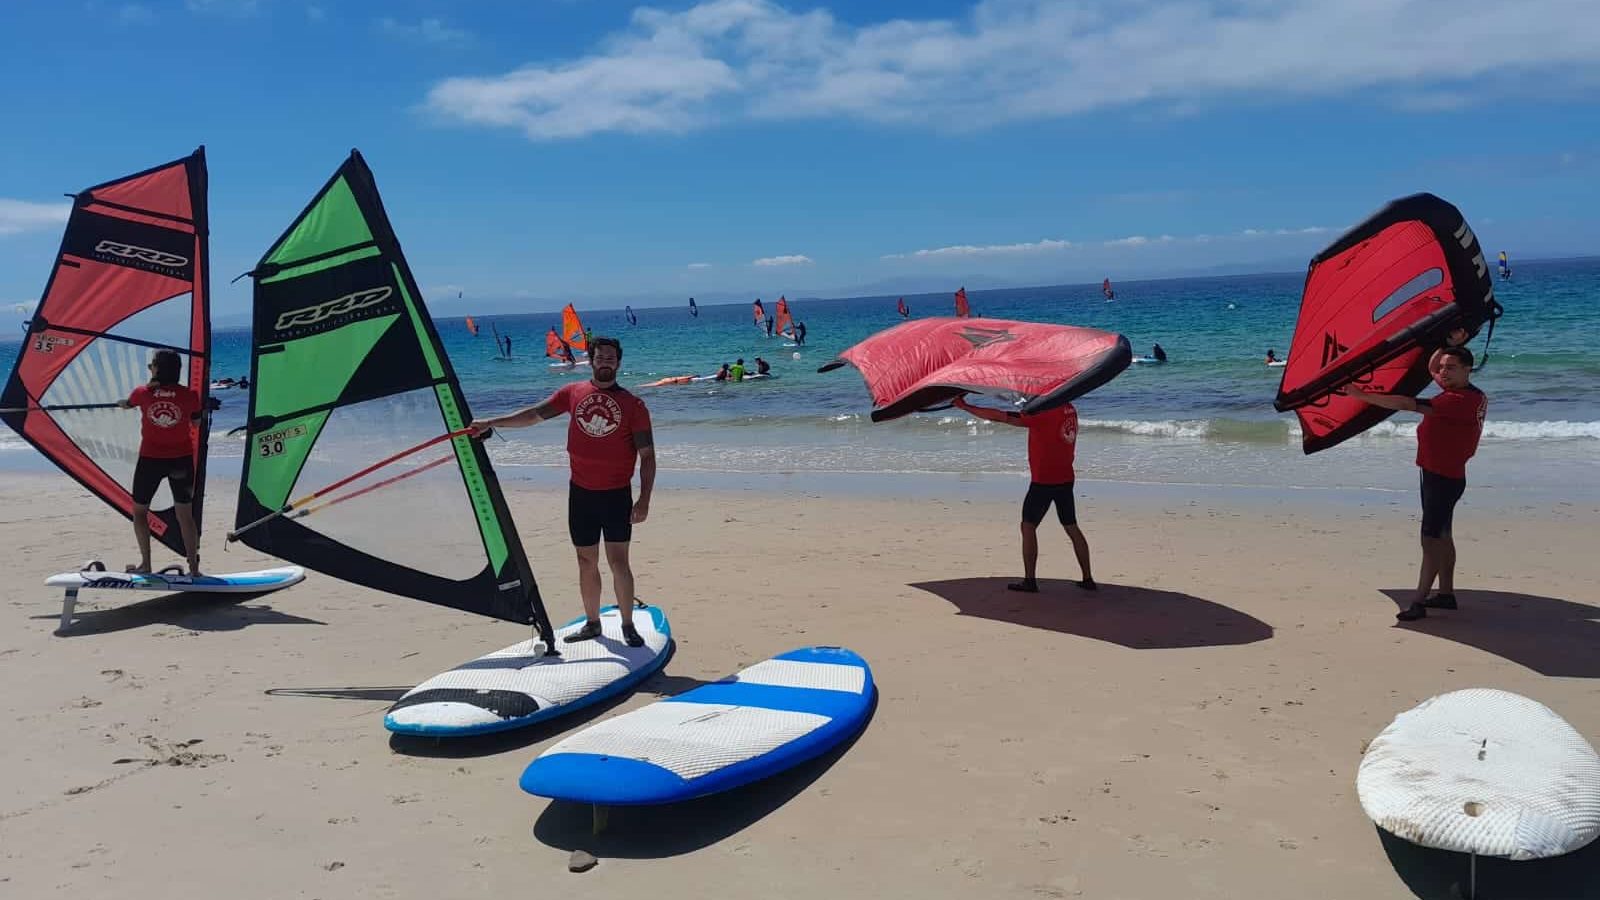 Top 9 Beaches in Spain for Windsurfing - Tarifa